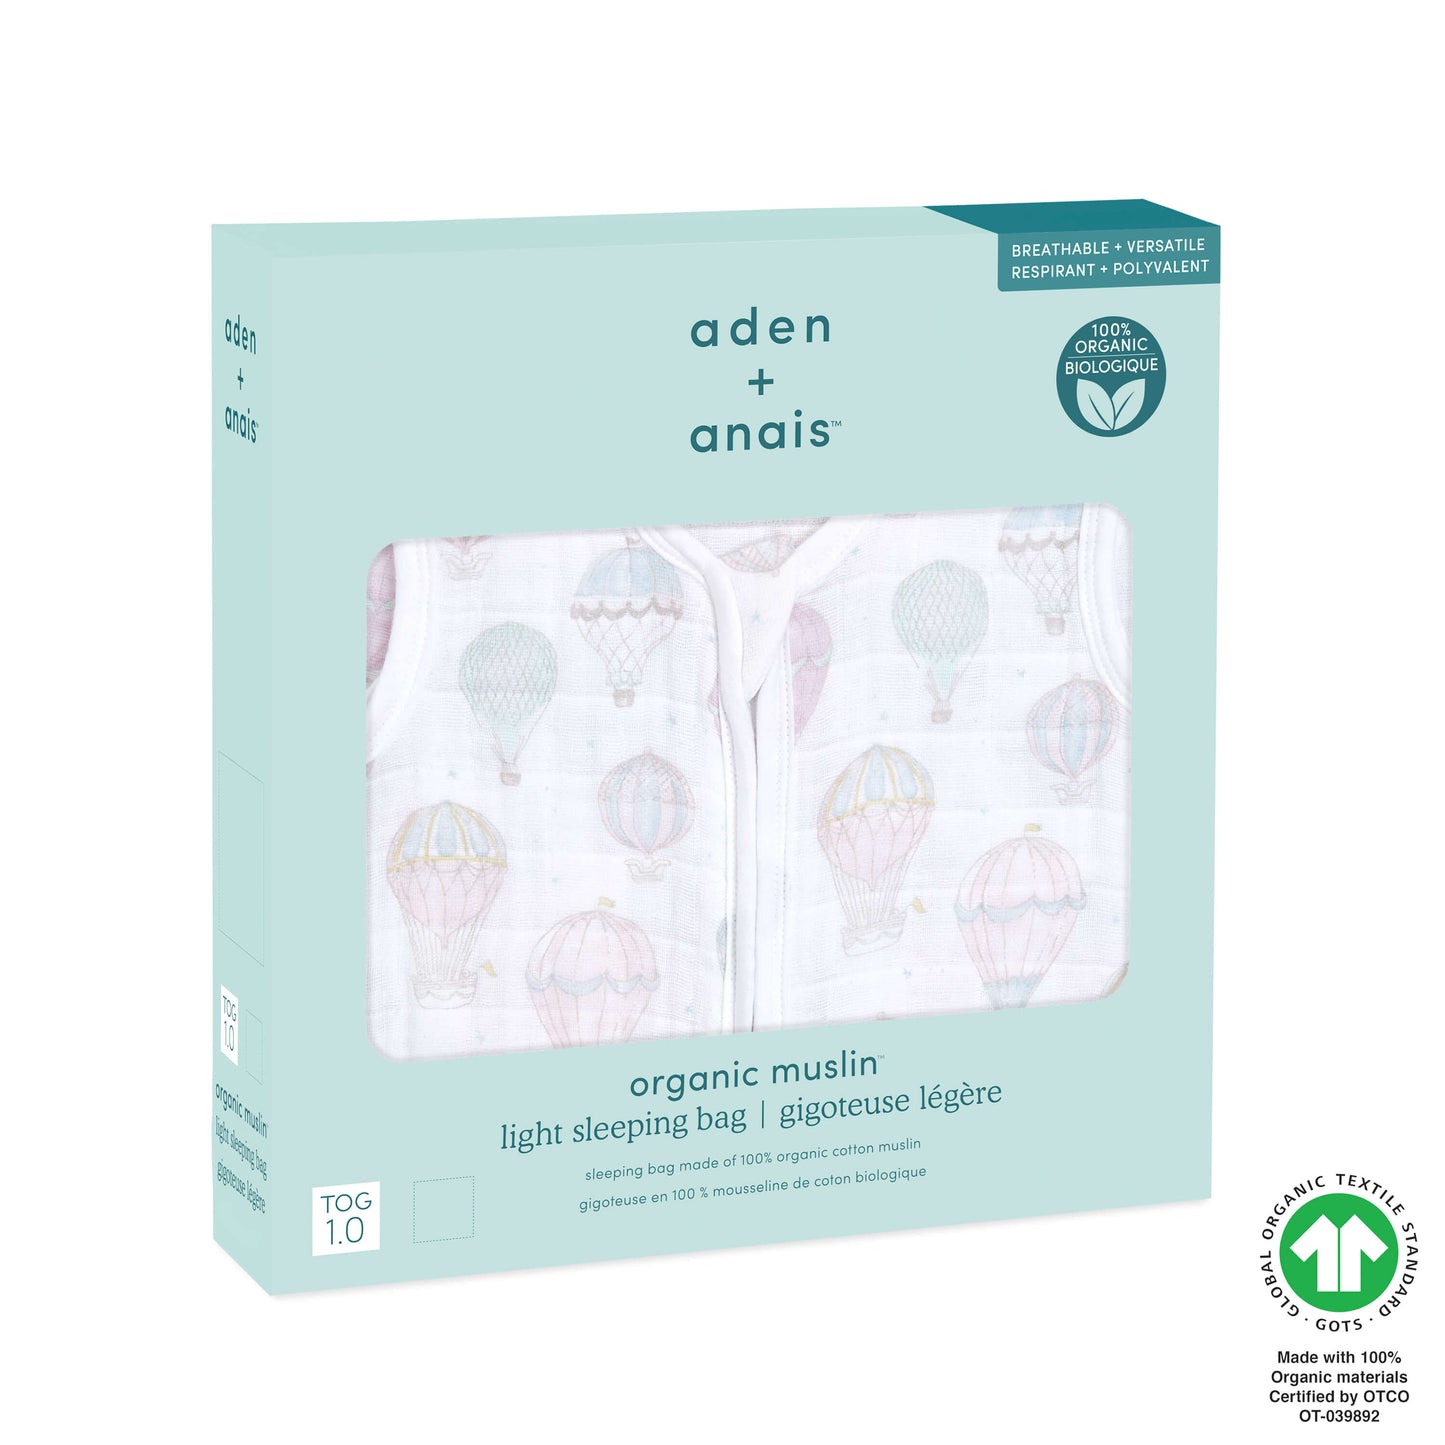 aden + anais Organic Cotton Light Sleeping Bag - 1.0 Tog (Above the Clouds)